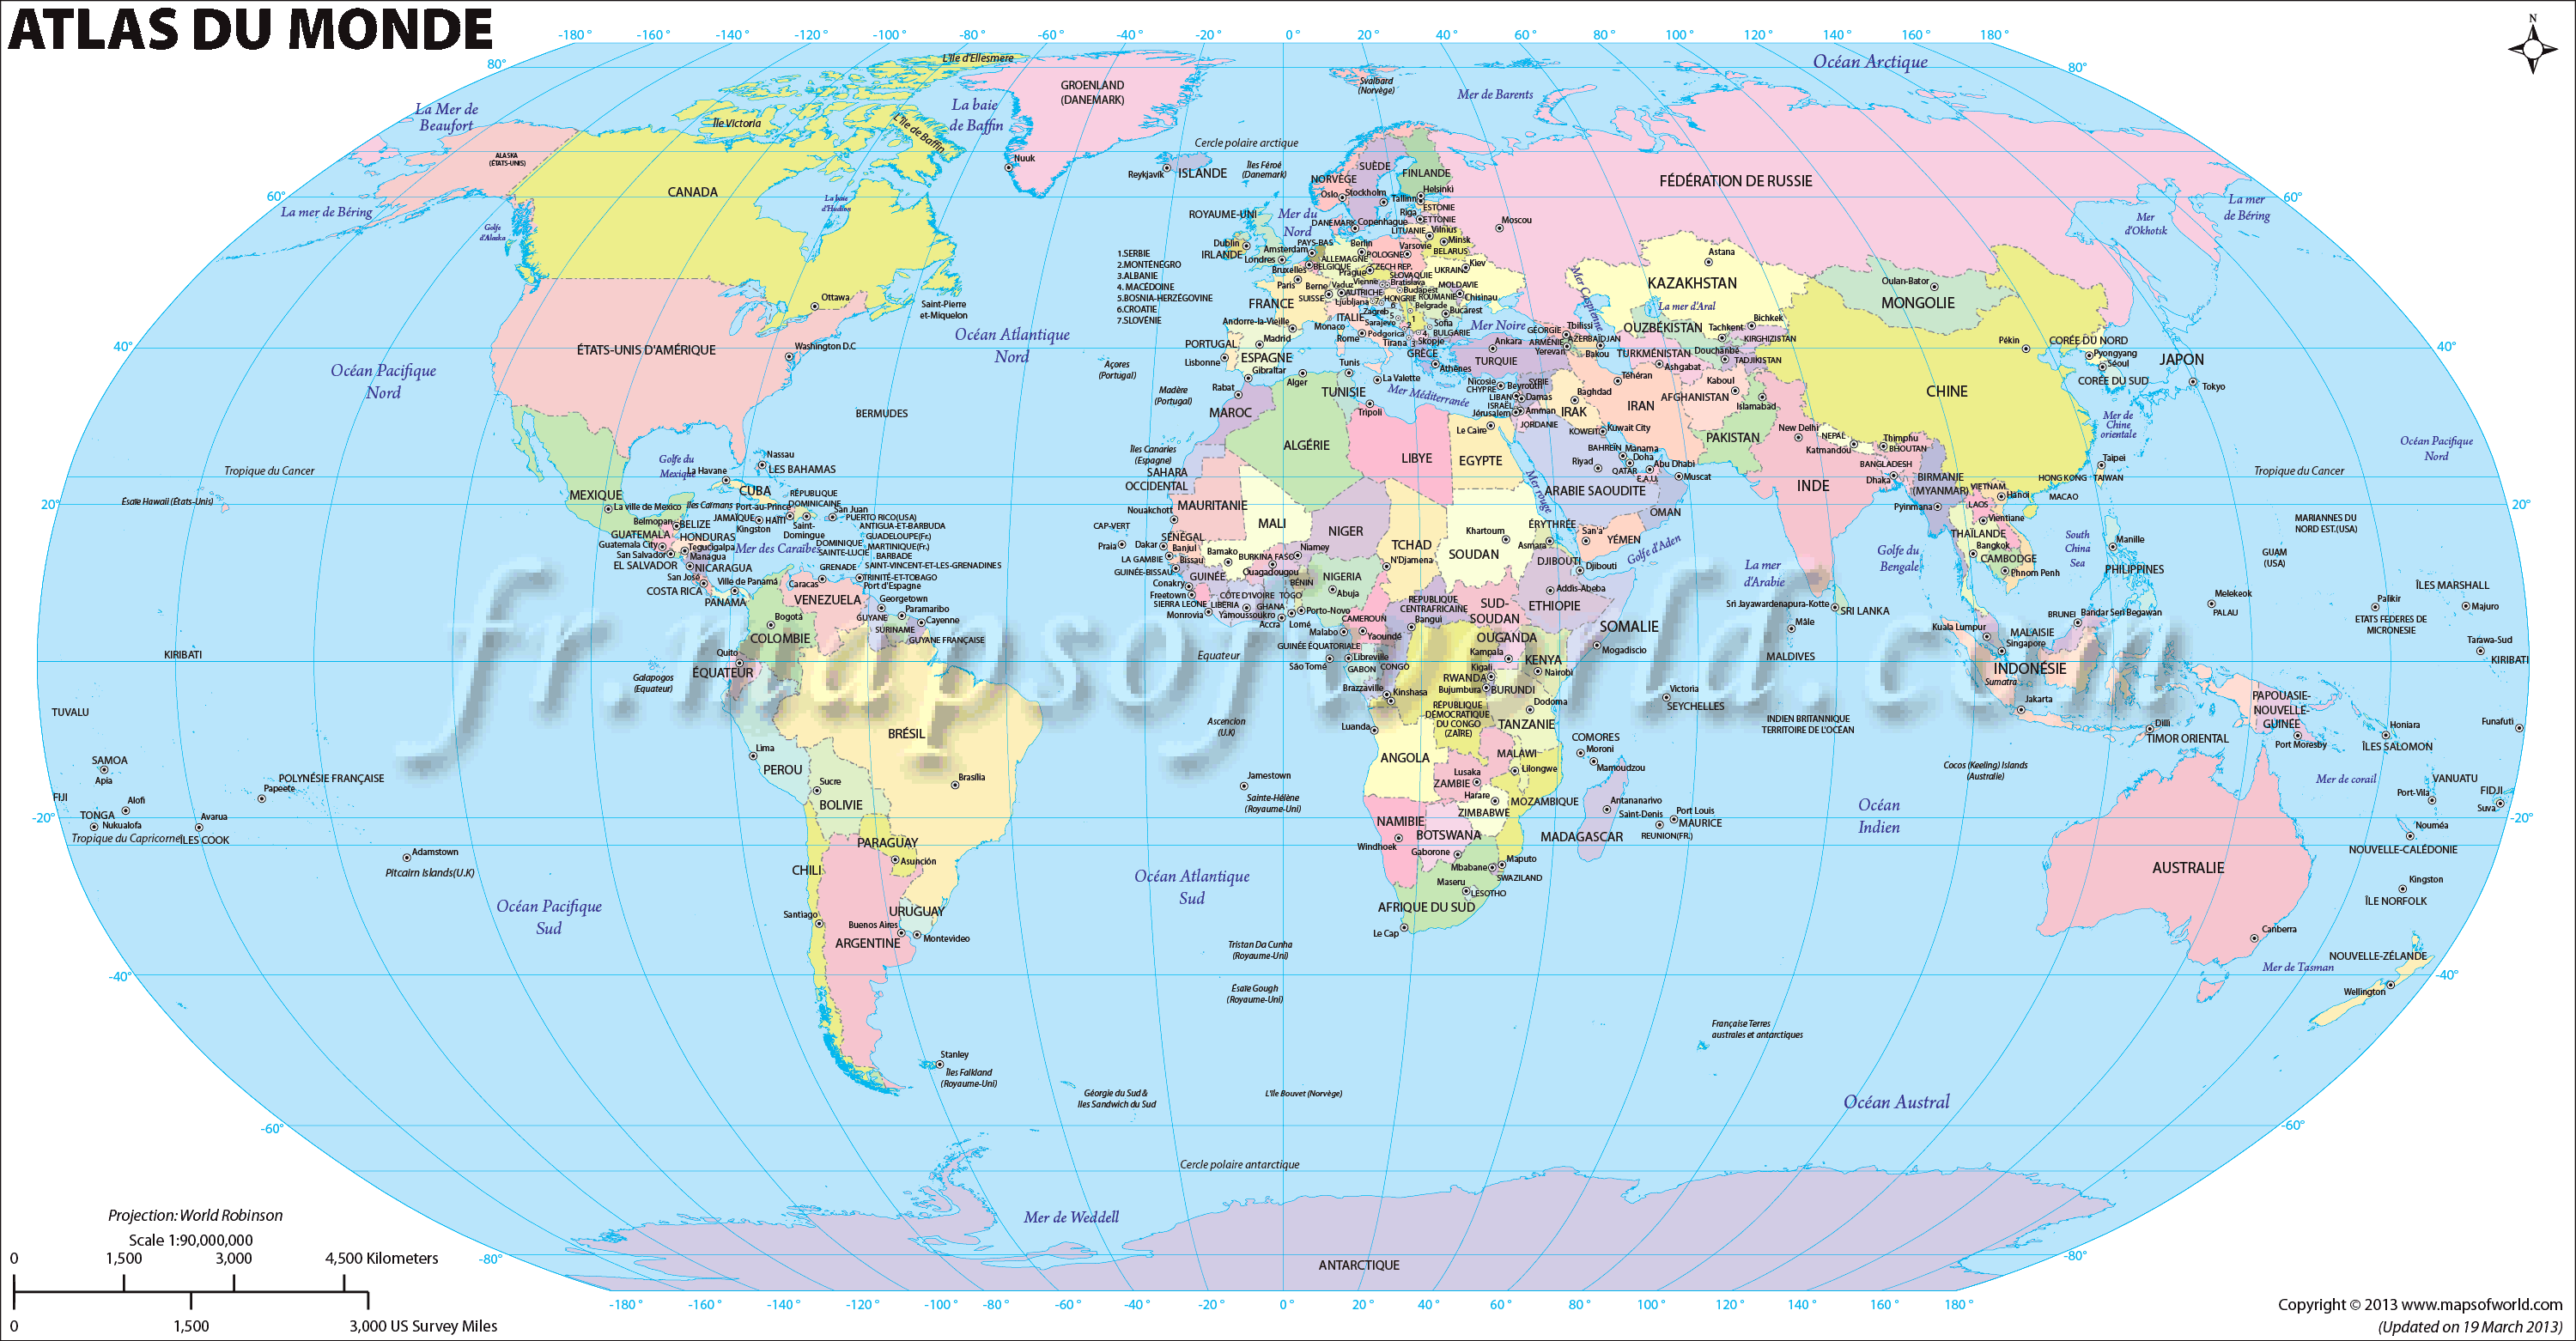 Atlas of World